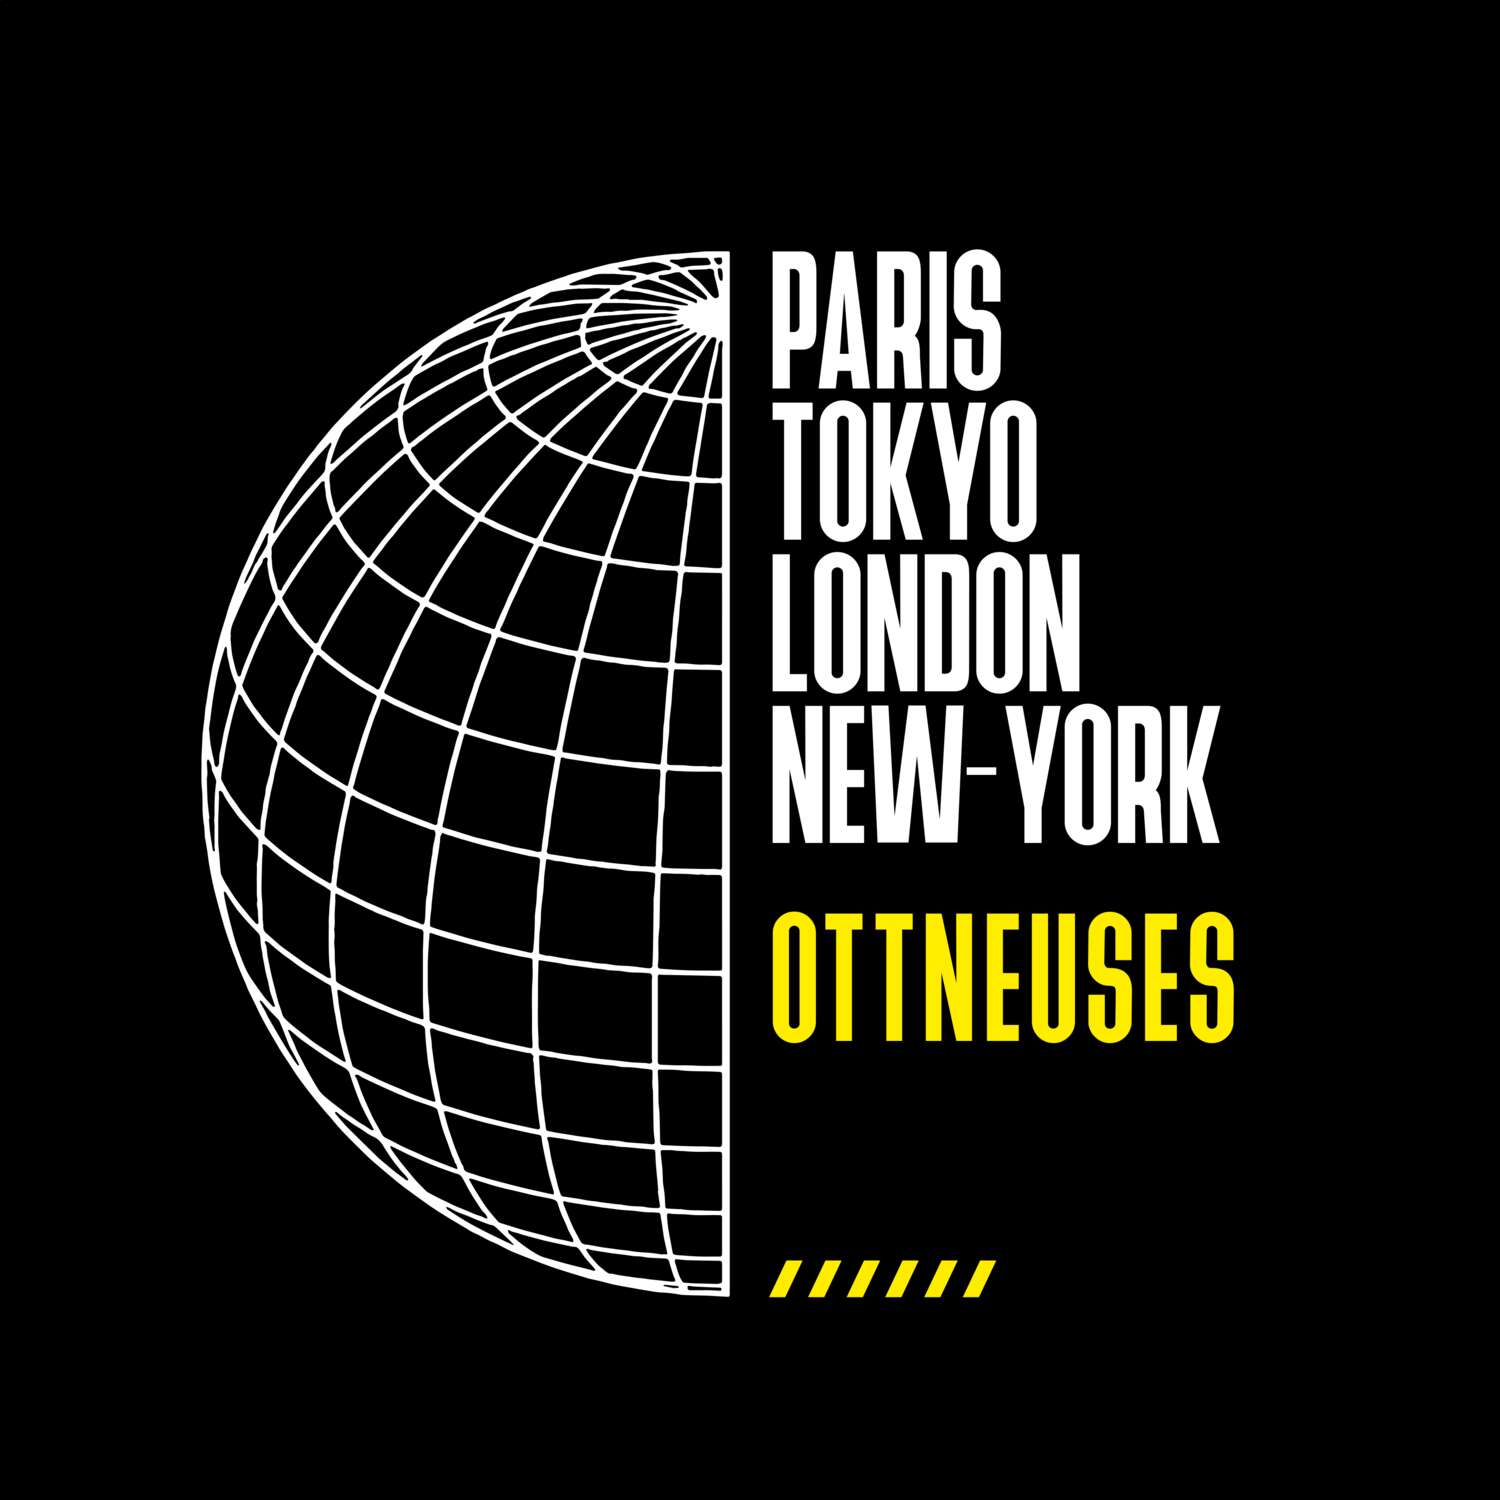 Ottneuses T-Shirt »Paris Tokyo London«